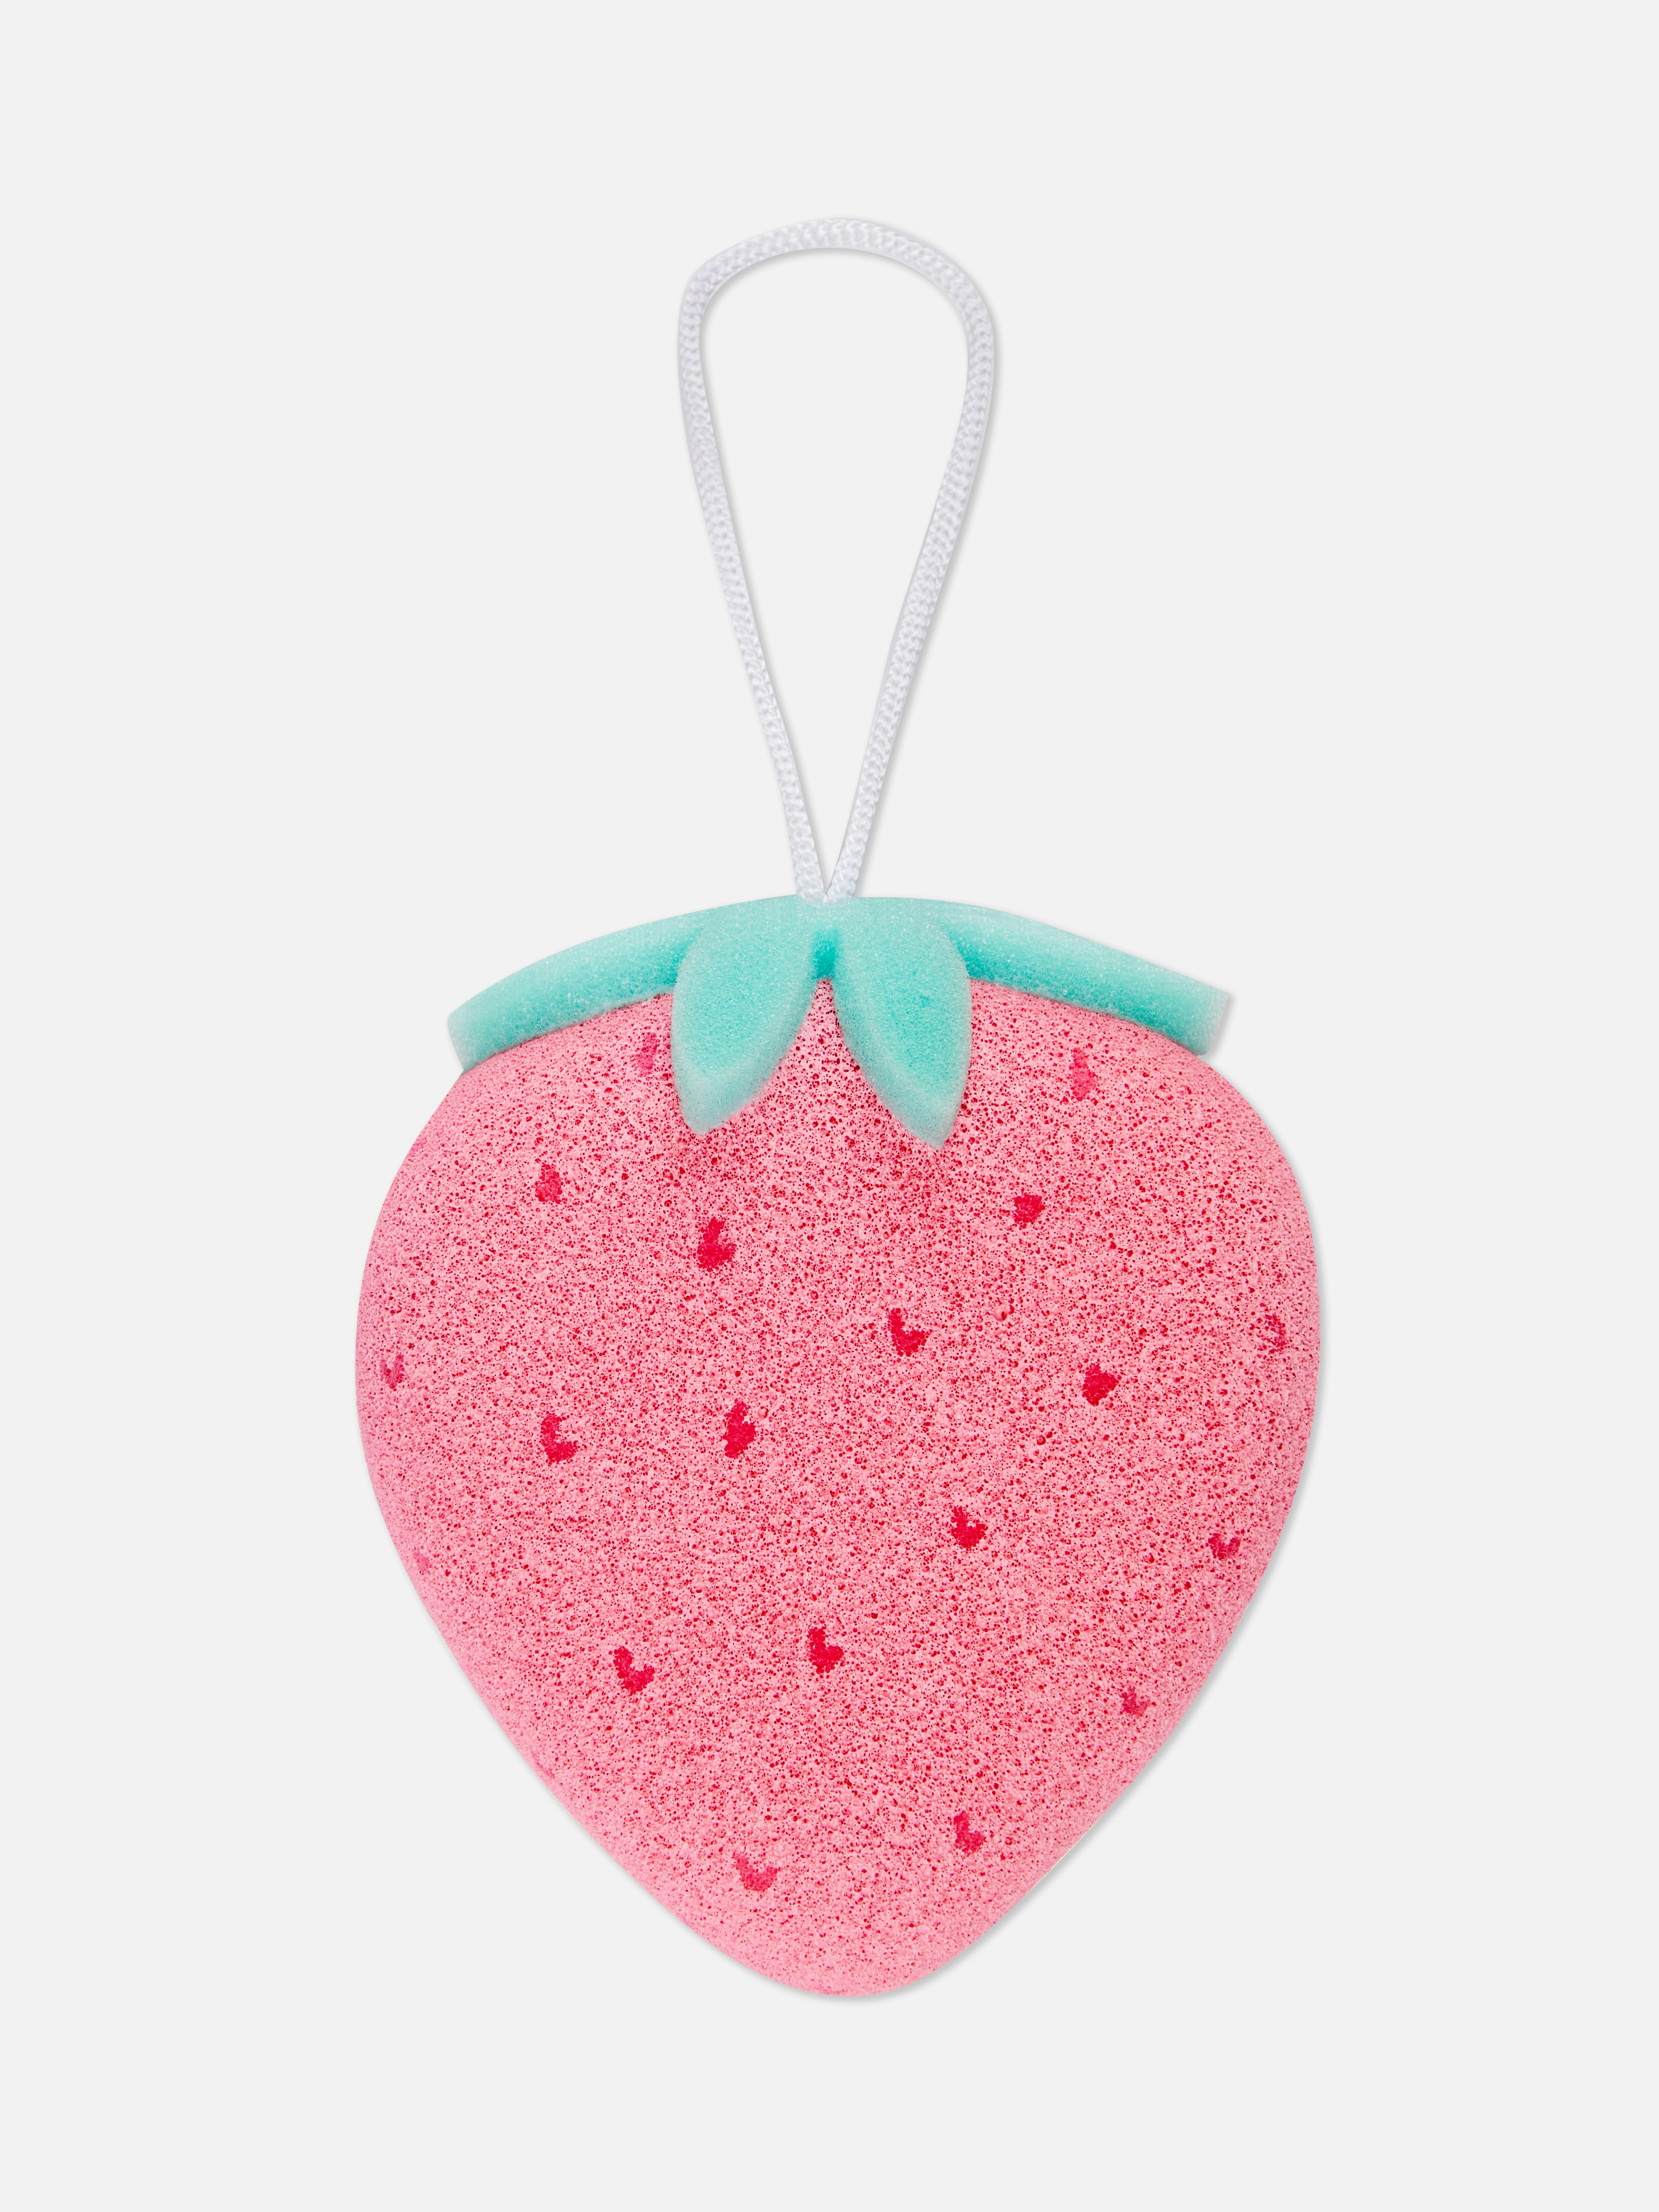 Hanging Strawberry Sponge